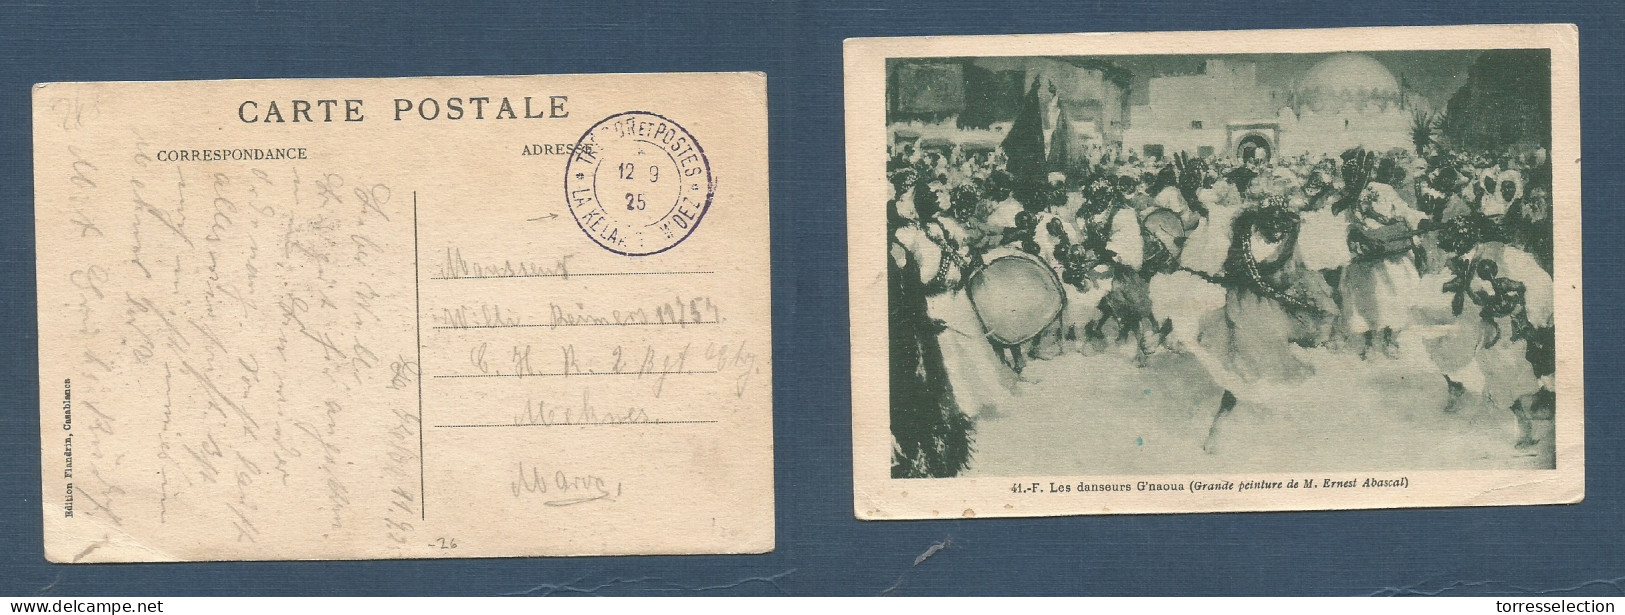 MARRUECOS - French. 1925 (12 Sept) La Kelare M Dez Mekinez. Military FM Violet Cachet. VF. XSALE. - Marruecos (1956-...)